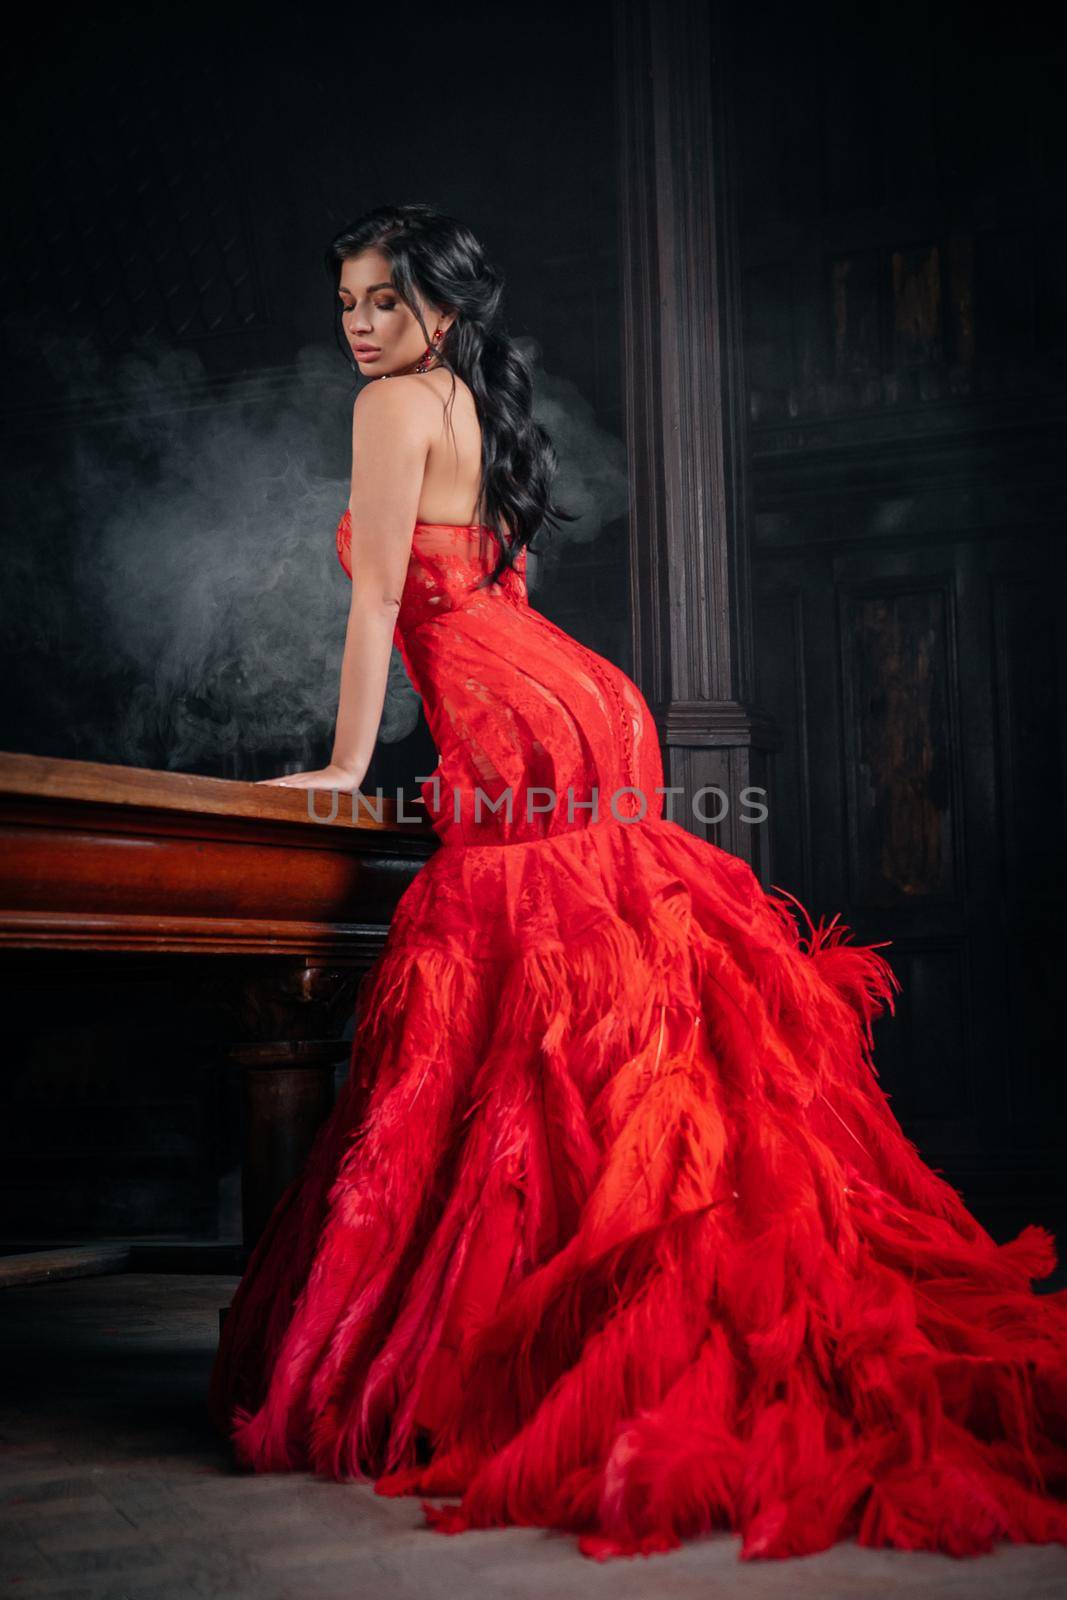 Woman Vintage Red Dress Old Castle Beautiful Princess In Seductive Dress Elegant Caucasian Female Fairy Tale story